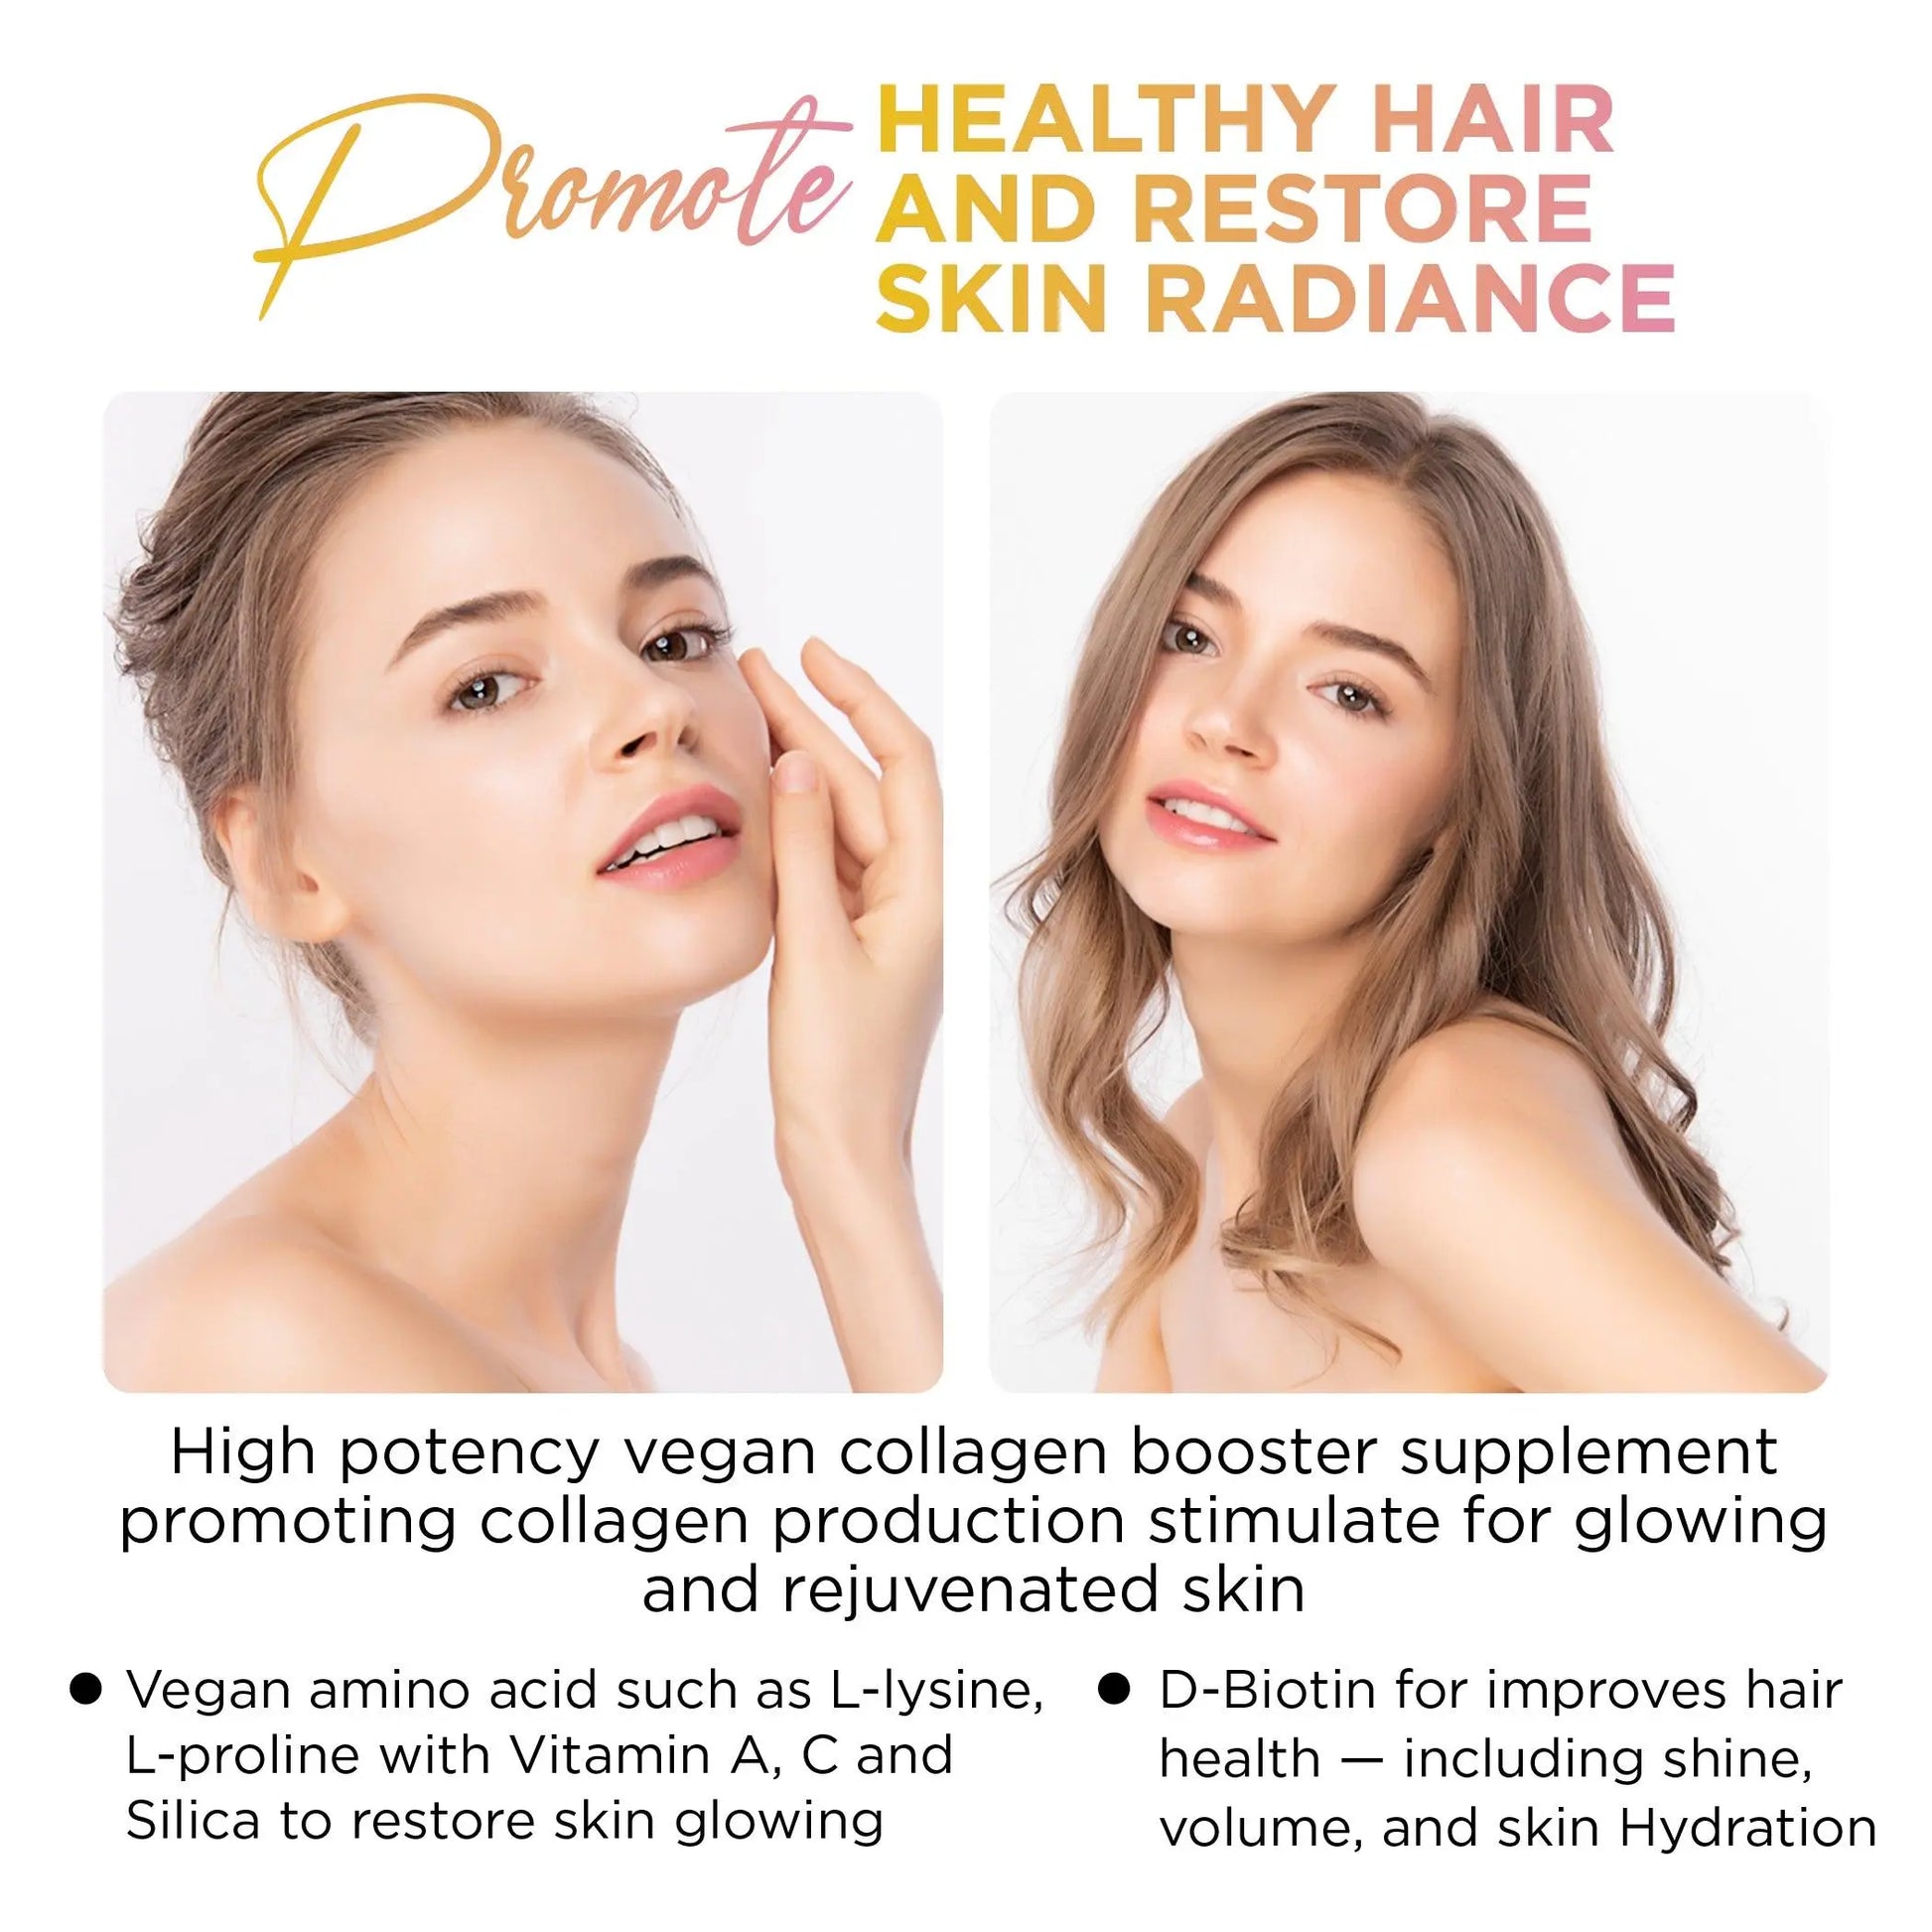 Beauty Glow Gummy - roxella® Skin and Haircare